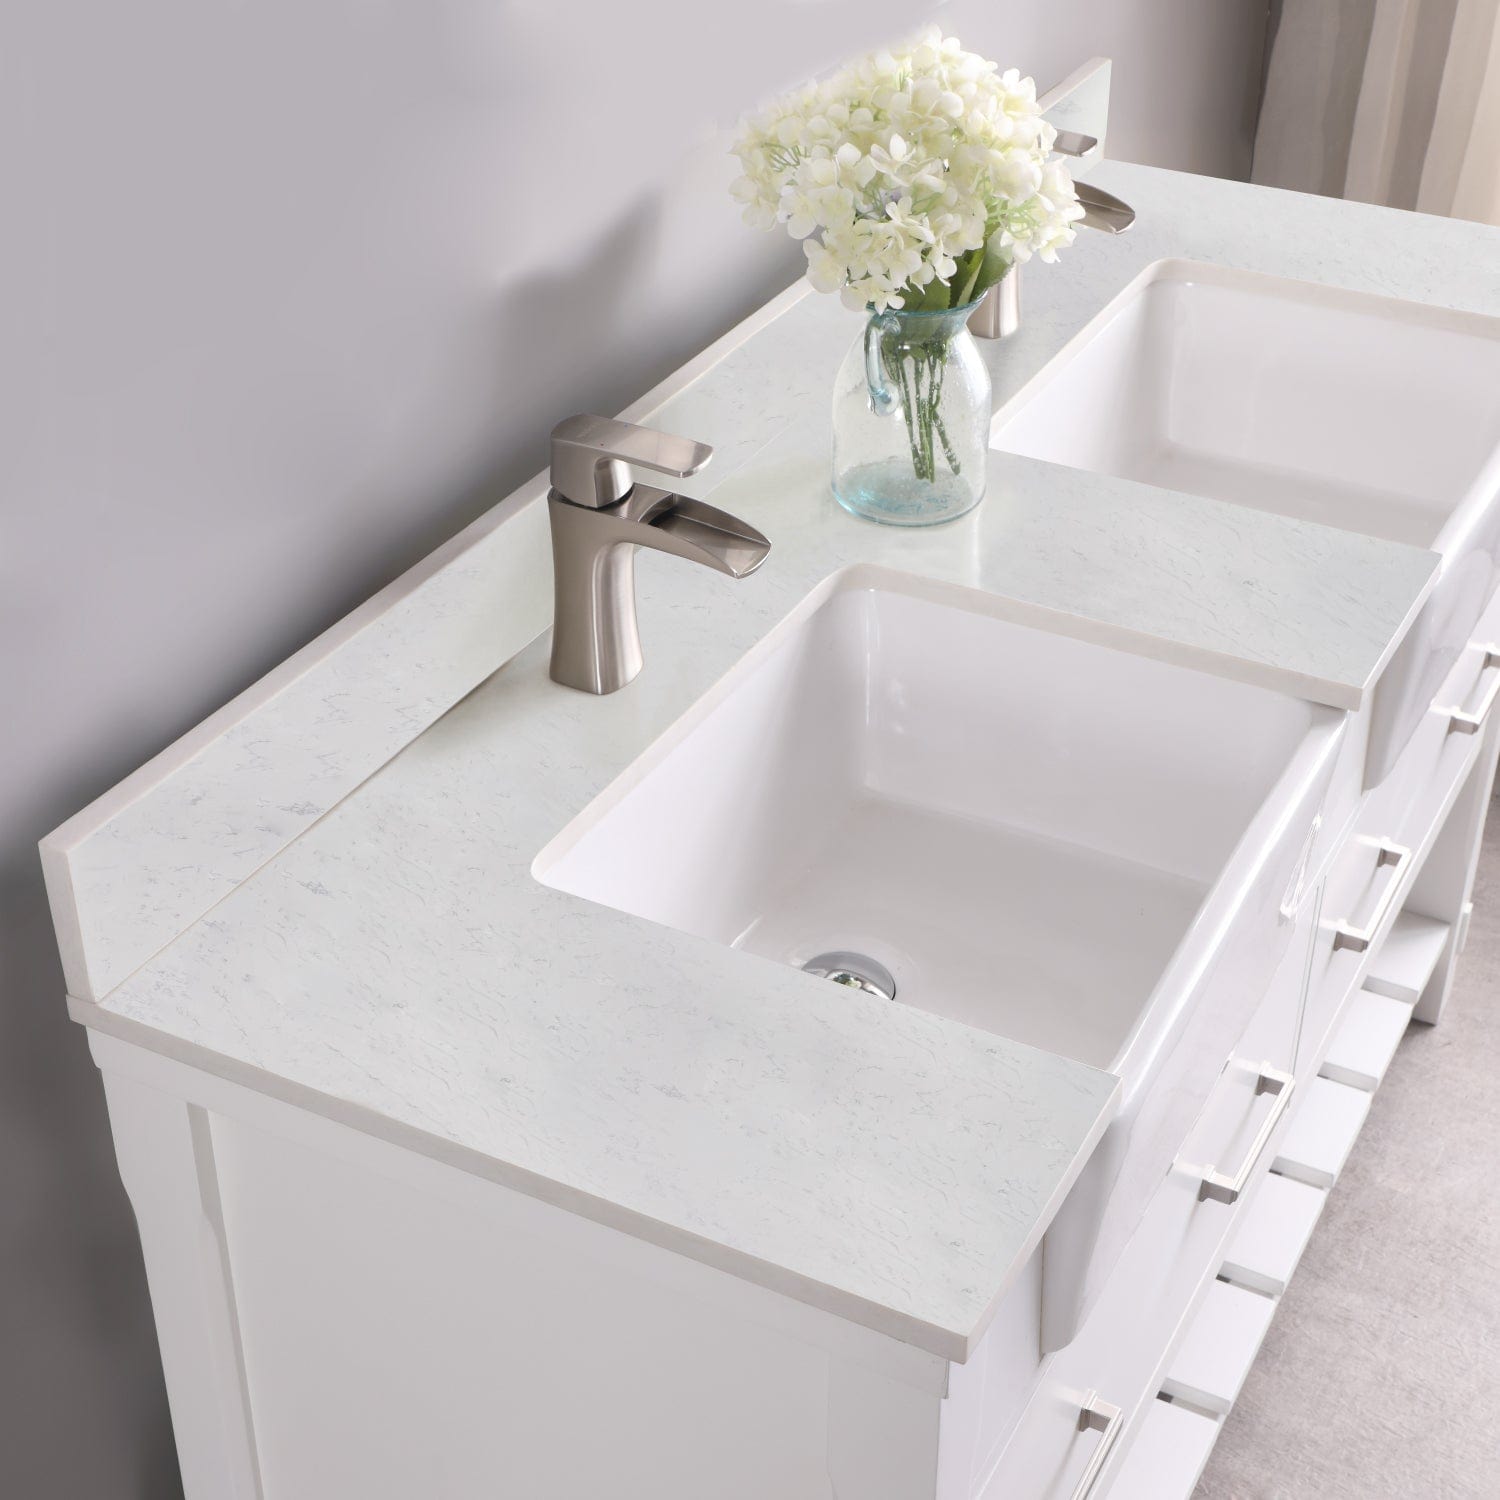 Altair Georgia 60" Double Bathroom Vanity Set in White and Composite Carrara White Stone Top with White Farmhouse Basin without Mirror 537060-WH-AW-NM - Molaix631112970662Vanity537060-WH-AW-NM